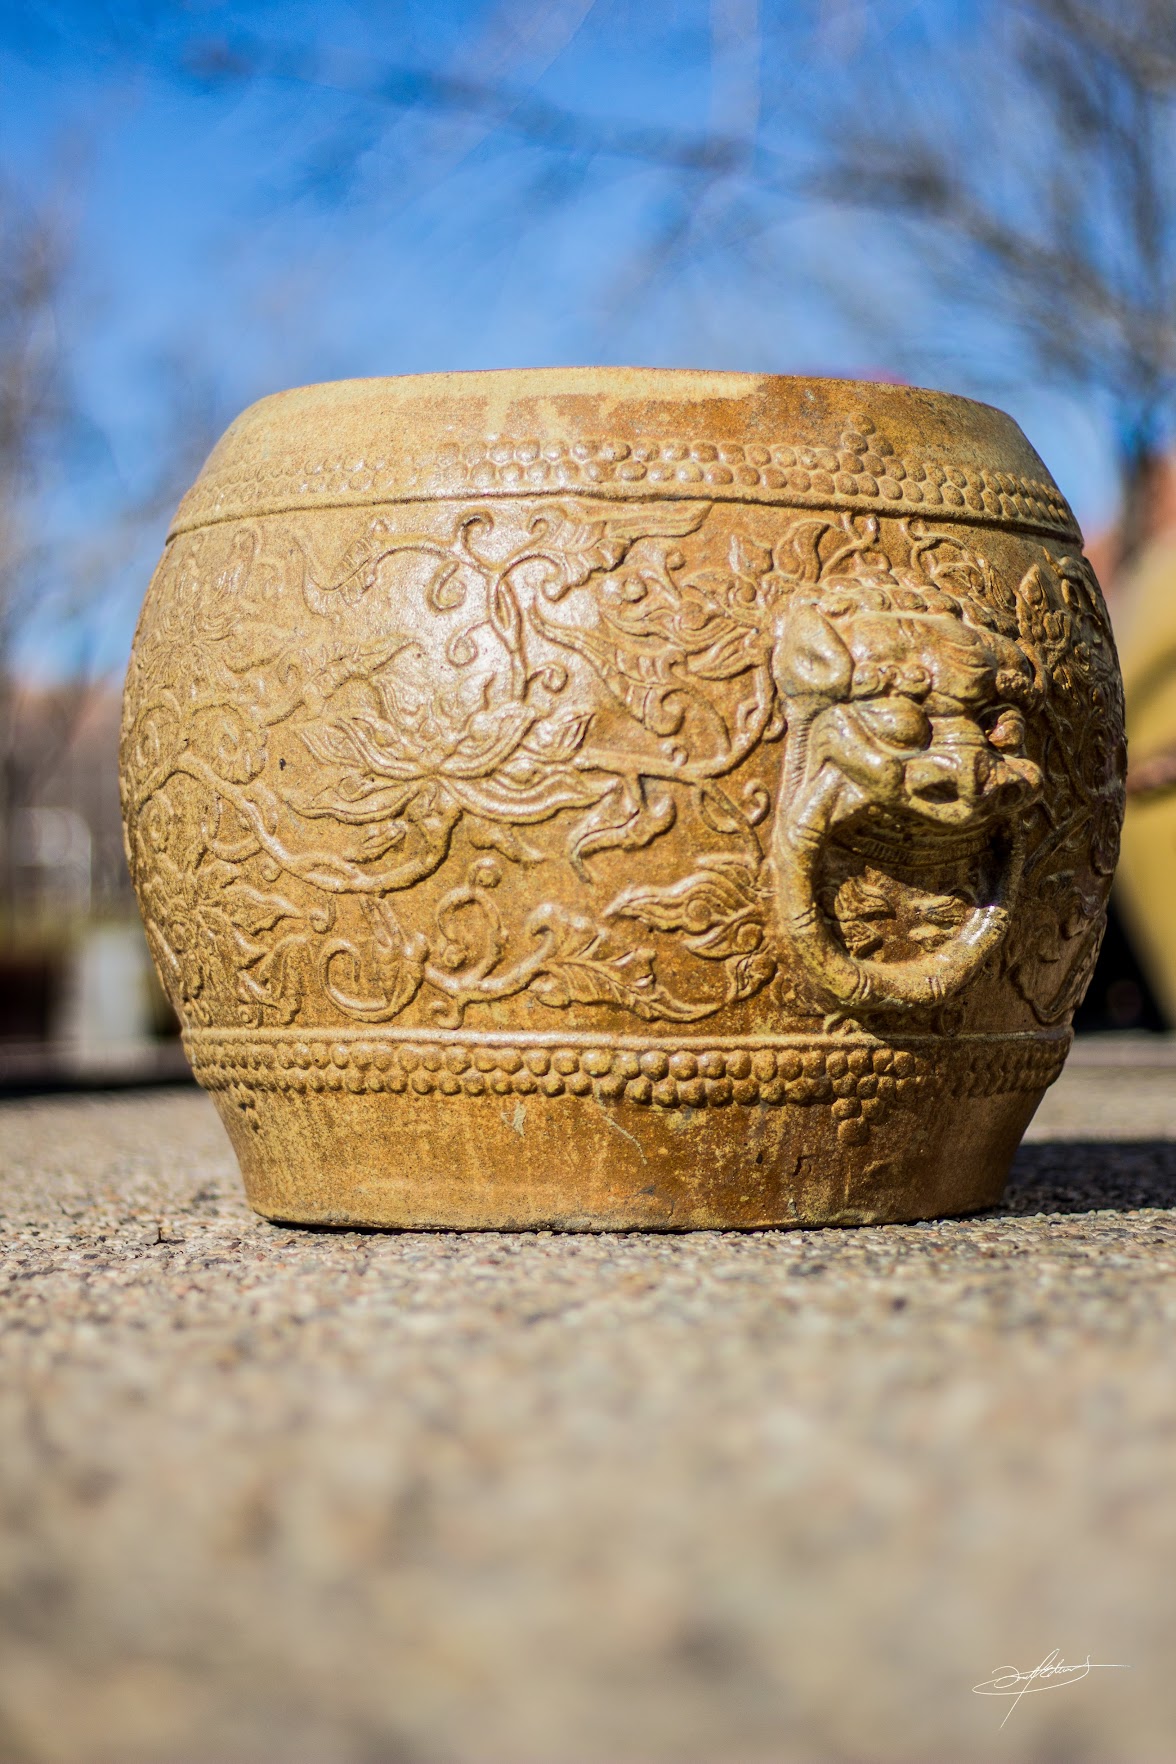 intricate art on a glazed ceramic pot at botanicals st george